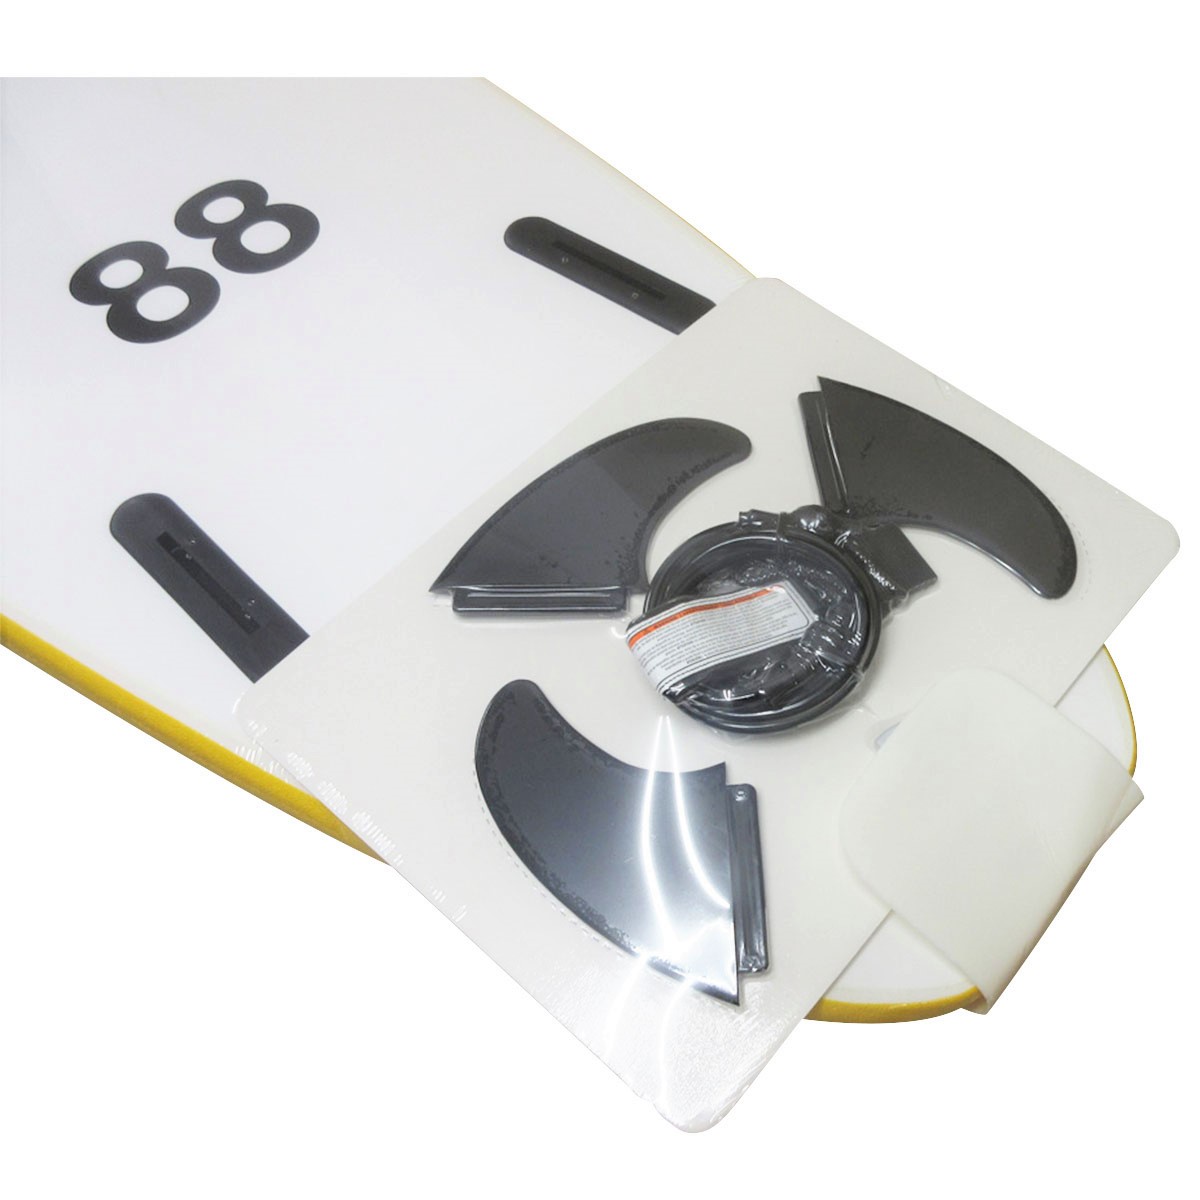 88 SURFBOARDS / THRUSTER 8`0 Yellow x White